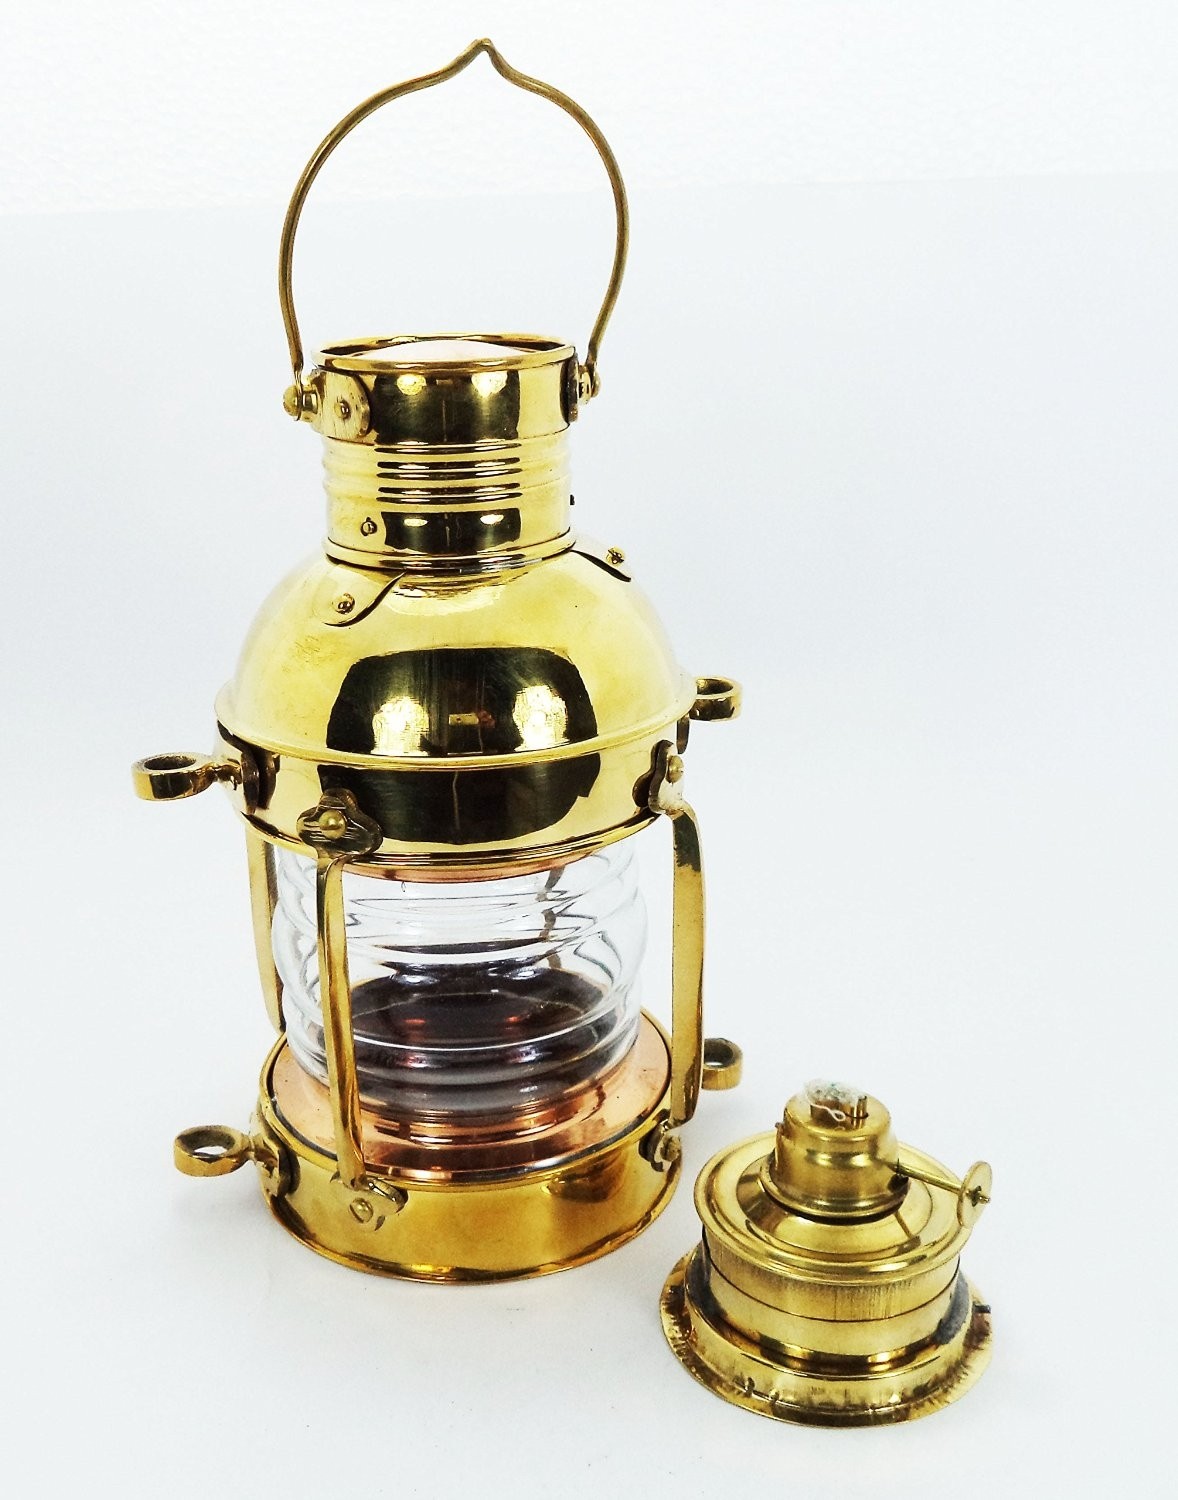 Hurricane Lantern Hand Designed Brass Lamp Decorative Cargo Oil Lamp Hanging Lamp Collectibles (Uses Lamp Oil or Kerosene)